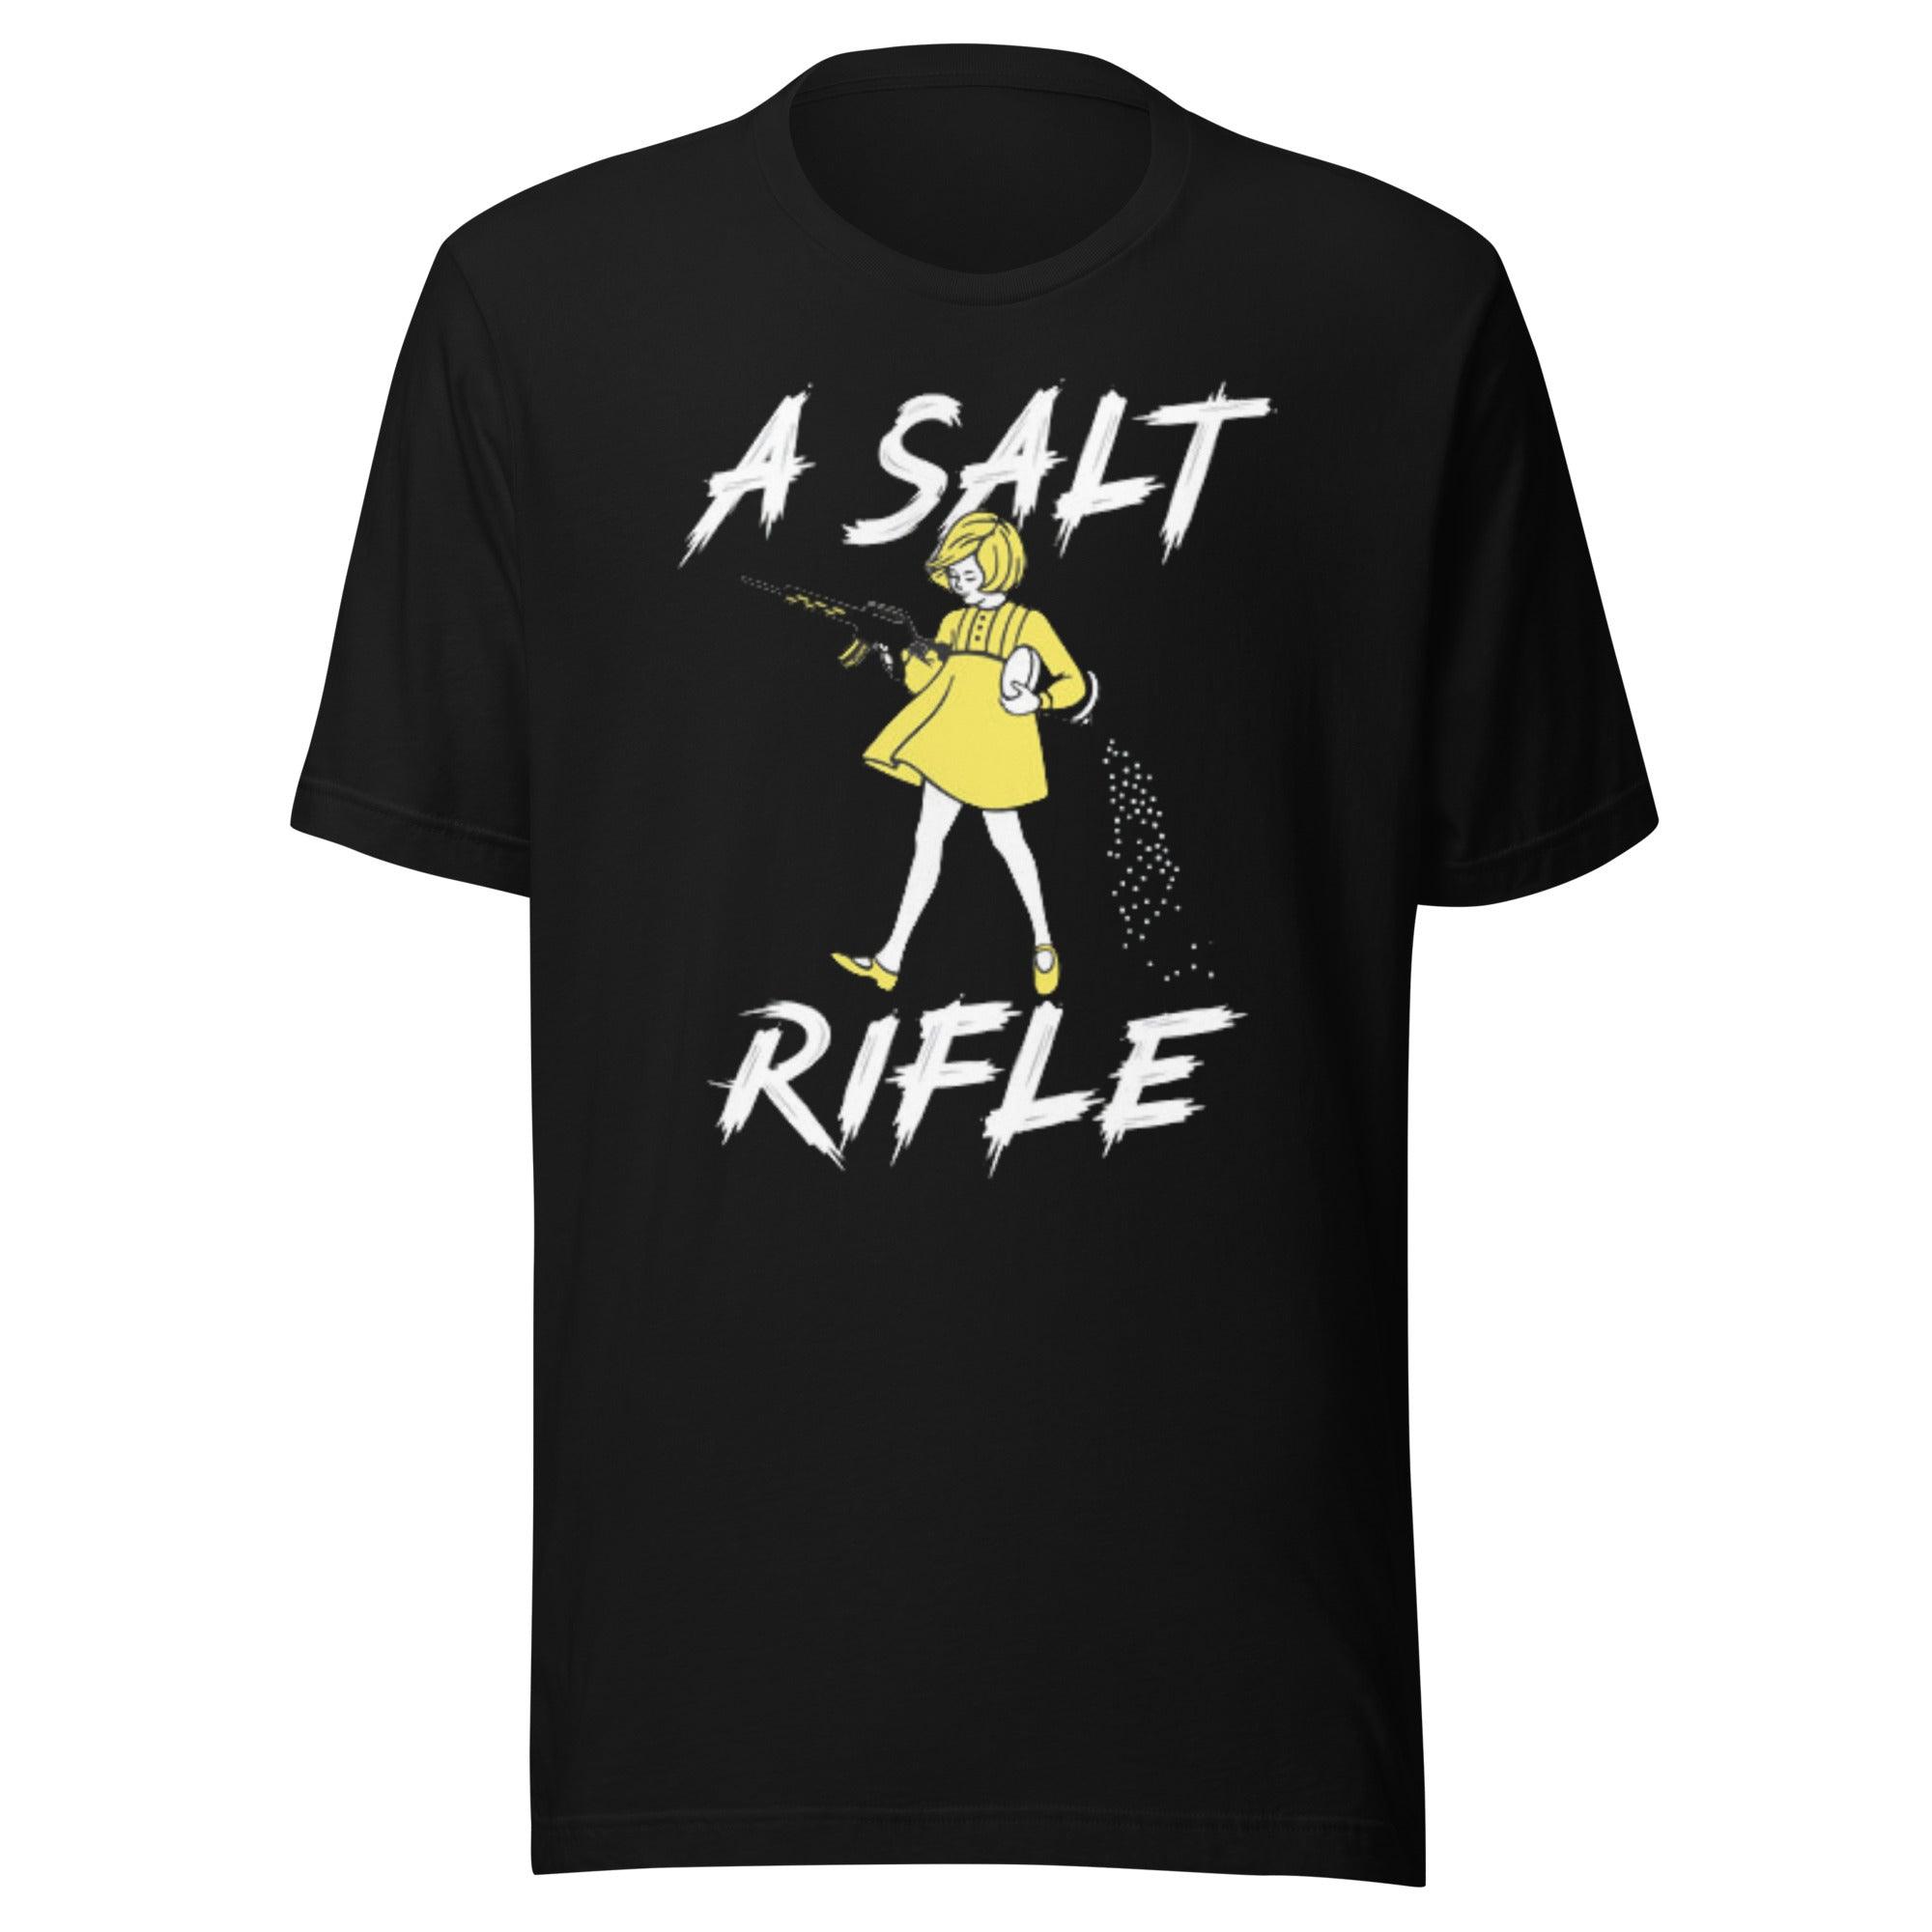 A Salt Rifle T-shirt Top Koala Softstyle Unisex Tee